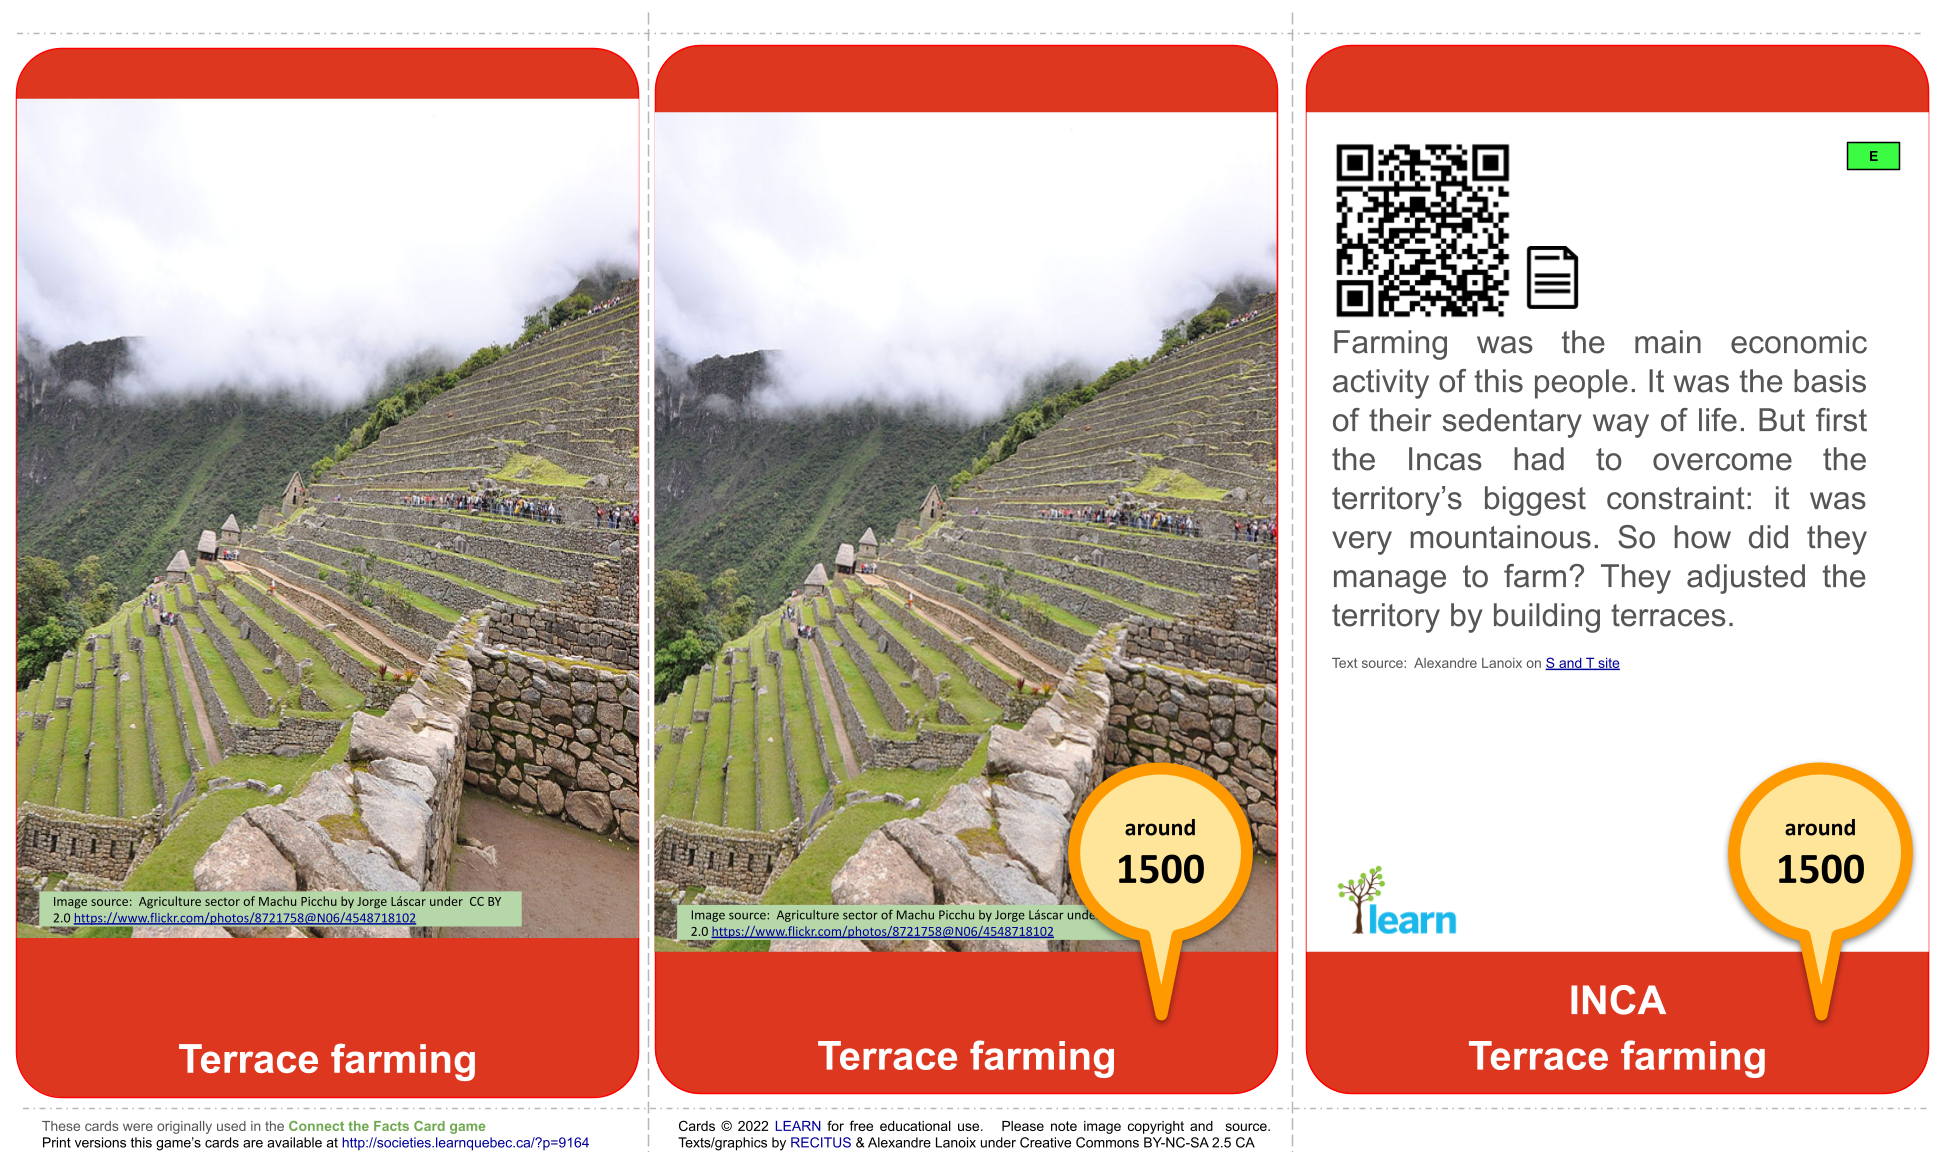 Inca: Terrace farming